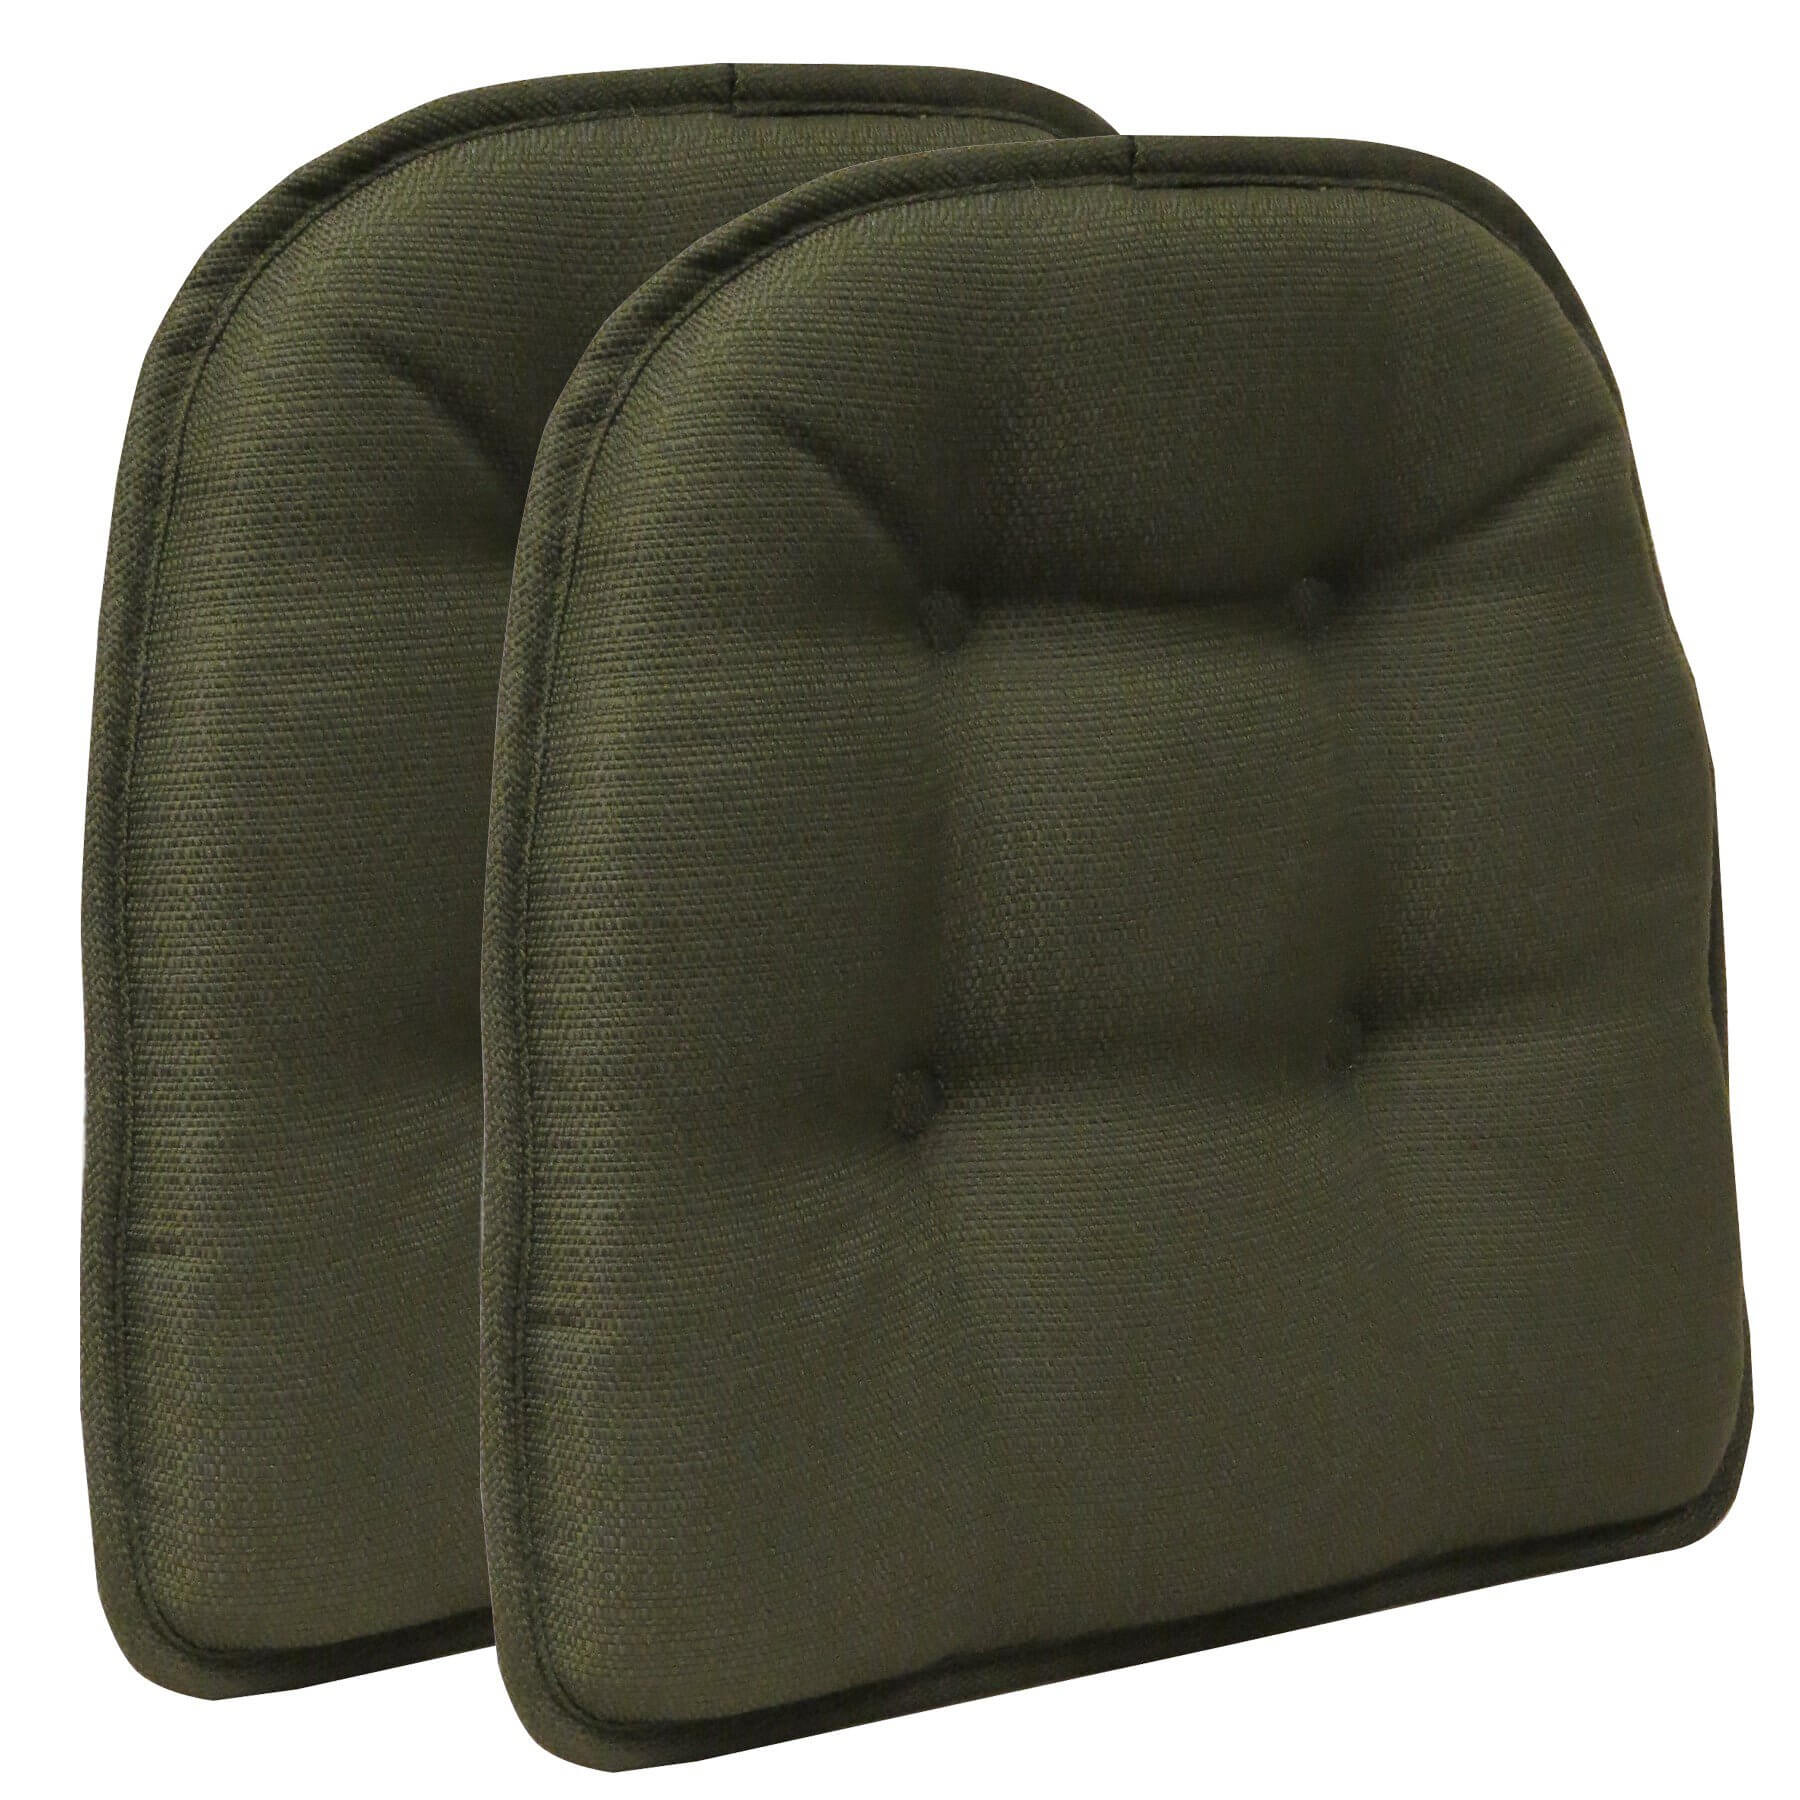 gripper chair pads